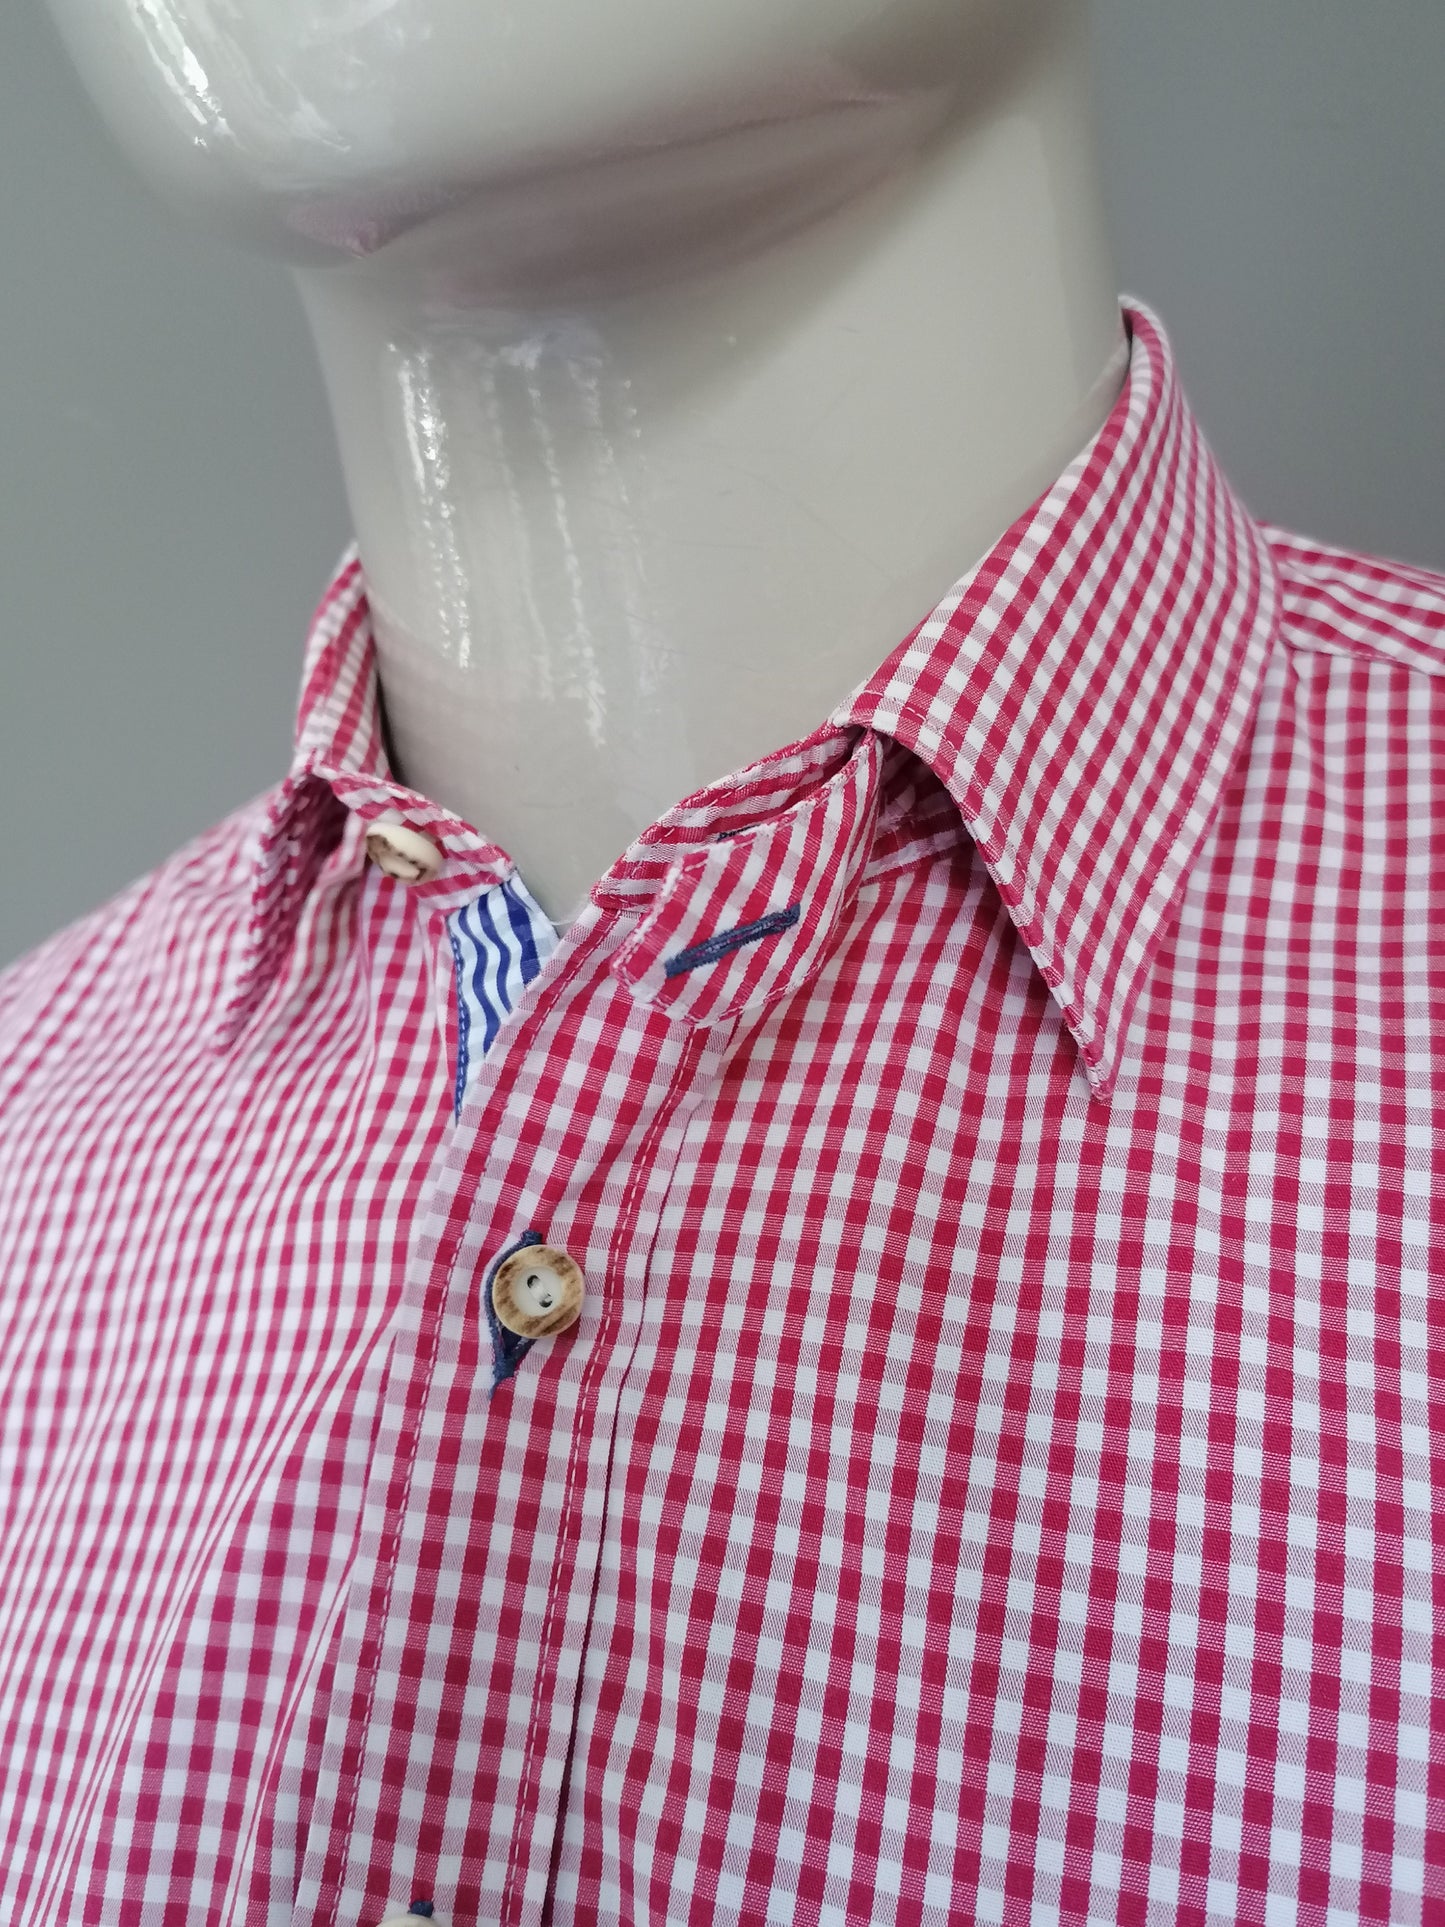 Camisa de Müller Maßmanufaktur. Red blanco a cuadros. Tamaño xl. "FJ"